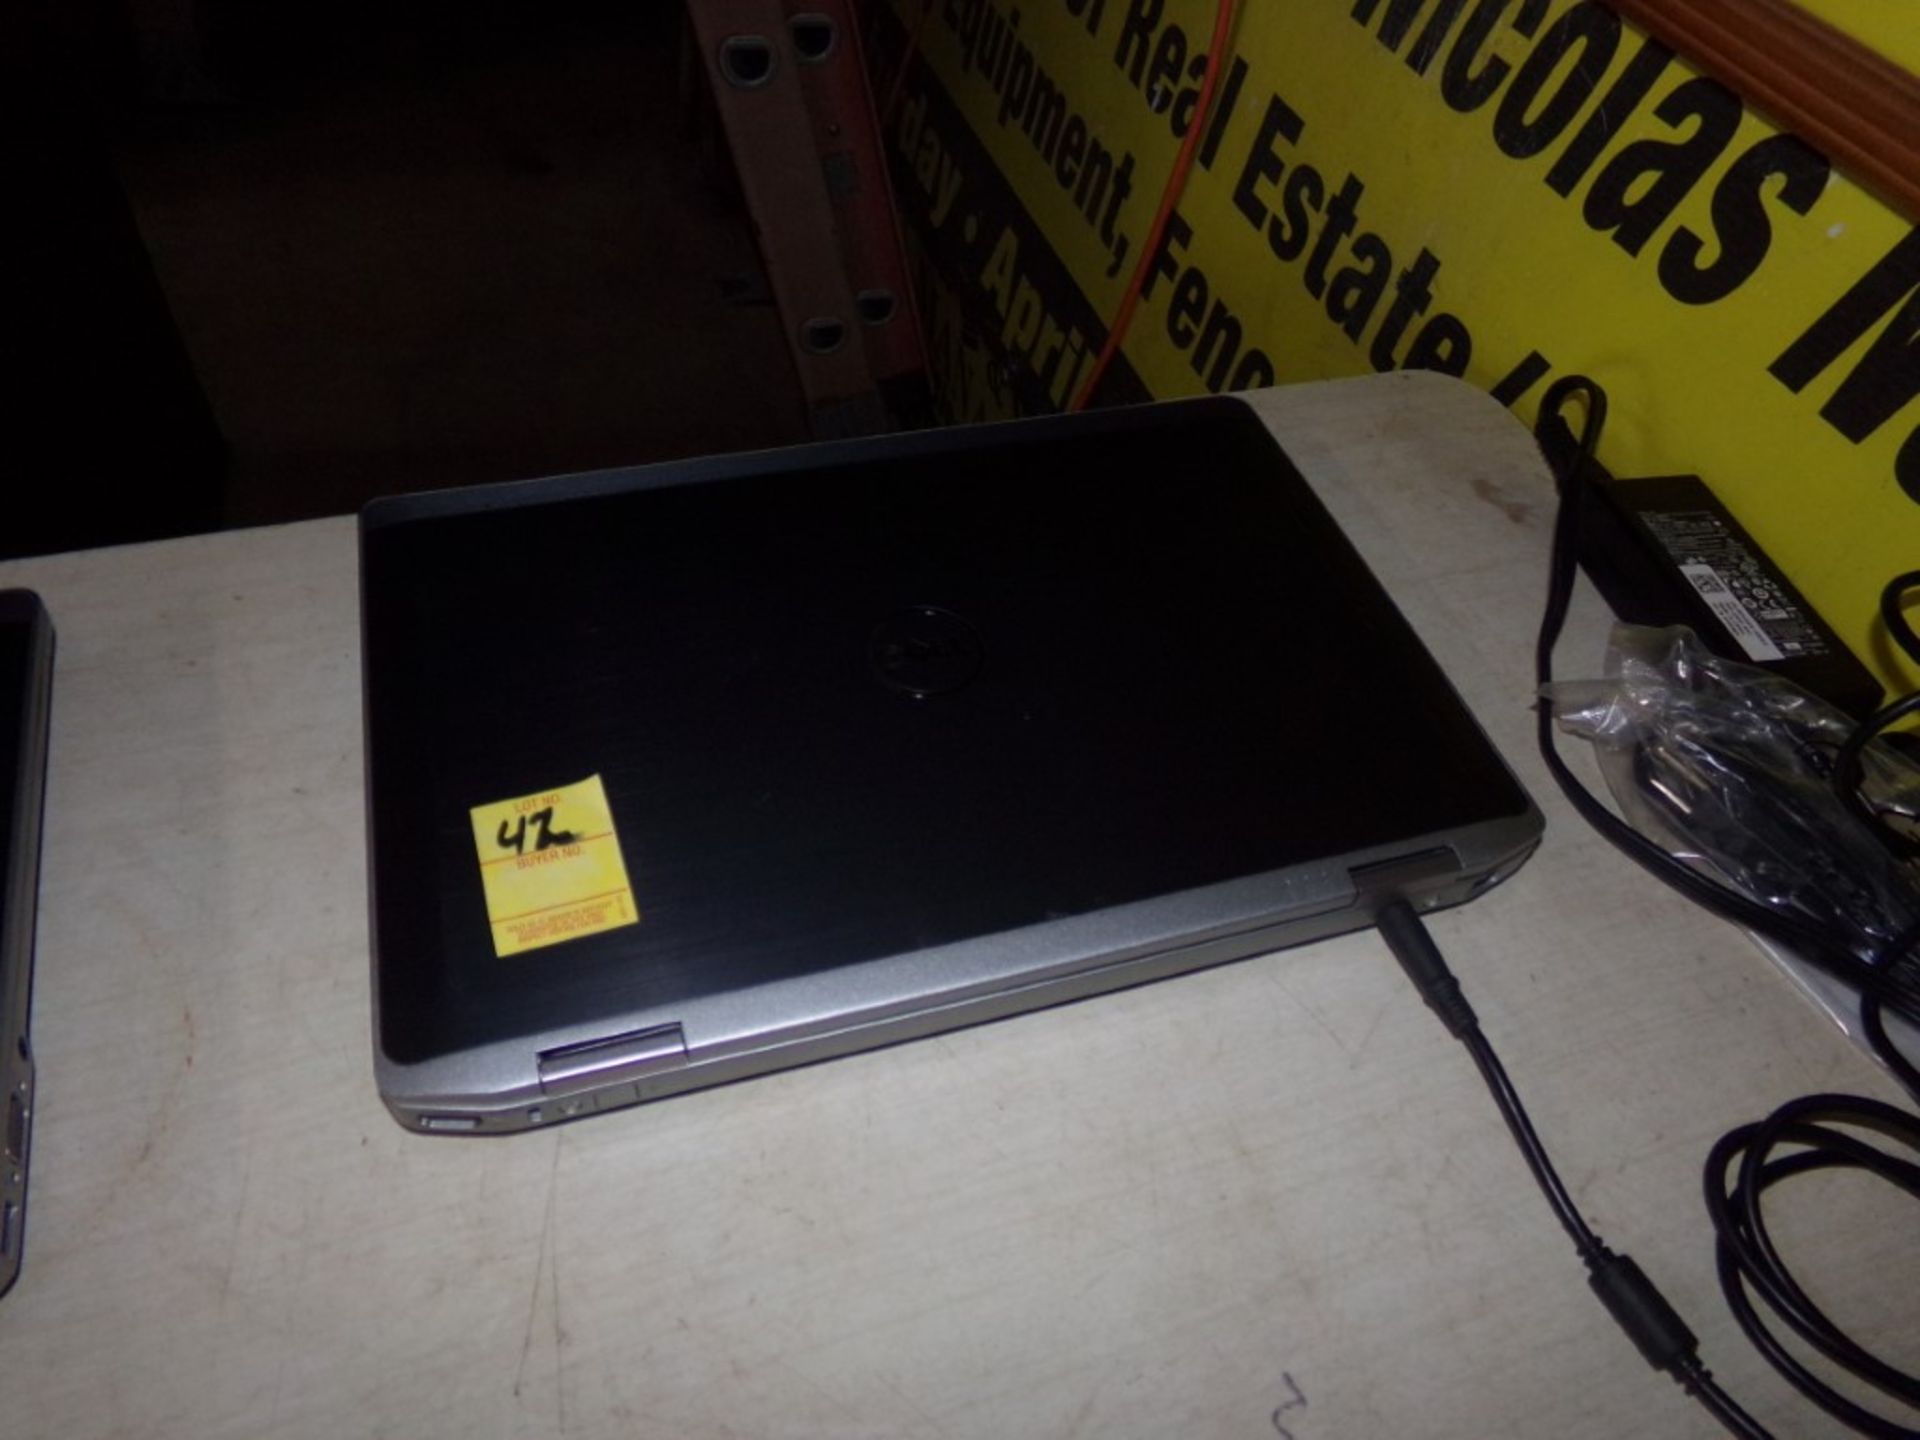 Dell Latitude E6430 Laptop with Cord, i3 Processor, 4GB Ram, 320GB Hard Drive, DVD RW Drive, WiFi,